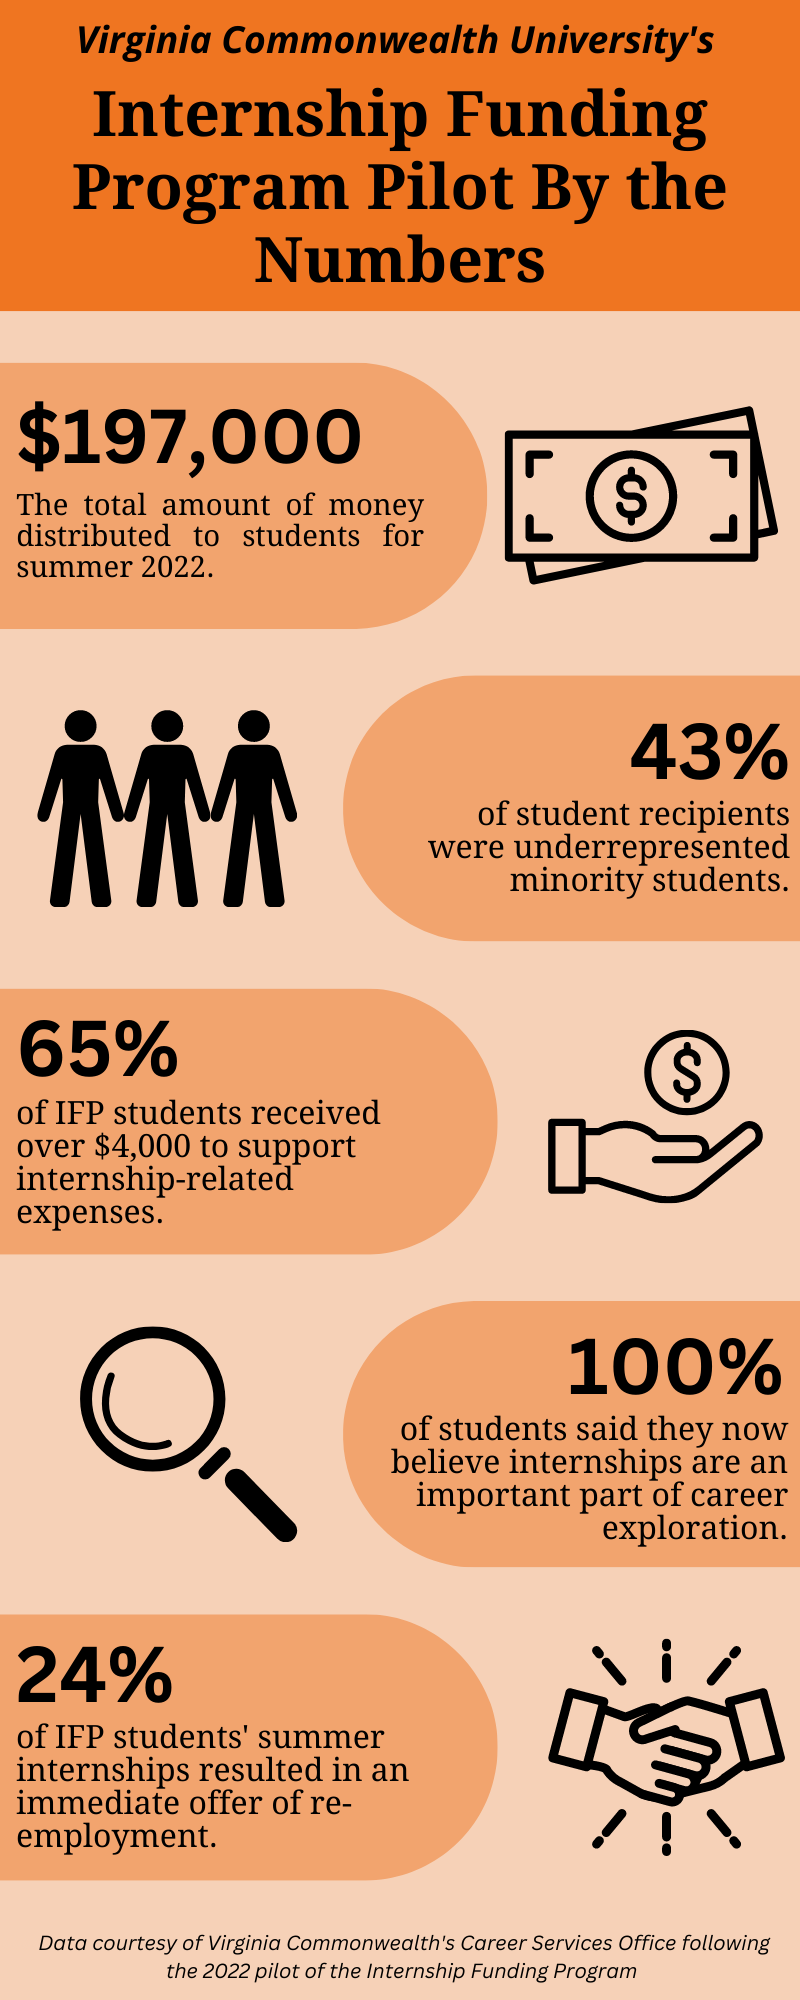 An infographic containing statistics related to Virginia Commonwealth University's Internship Funding Program